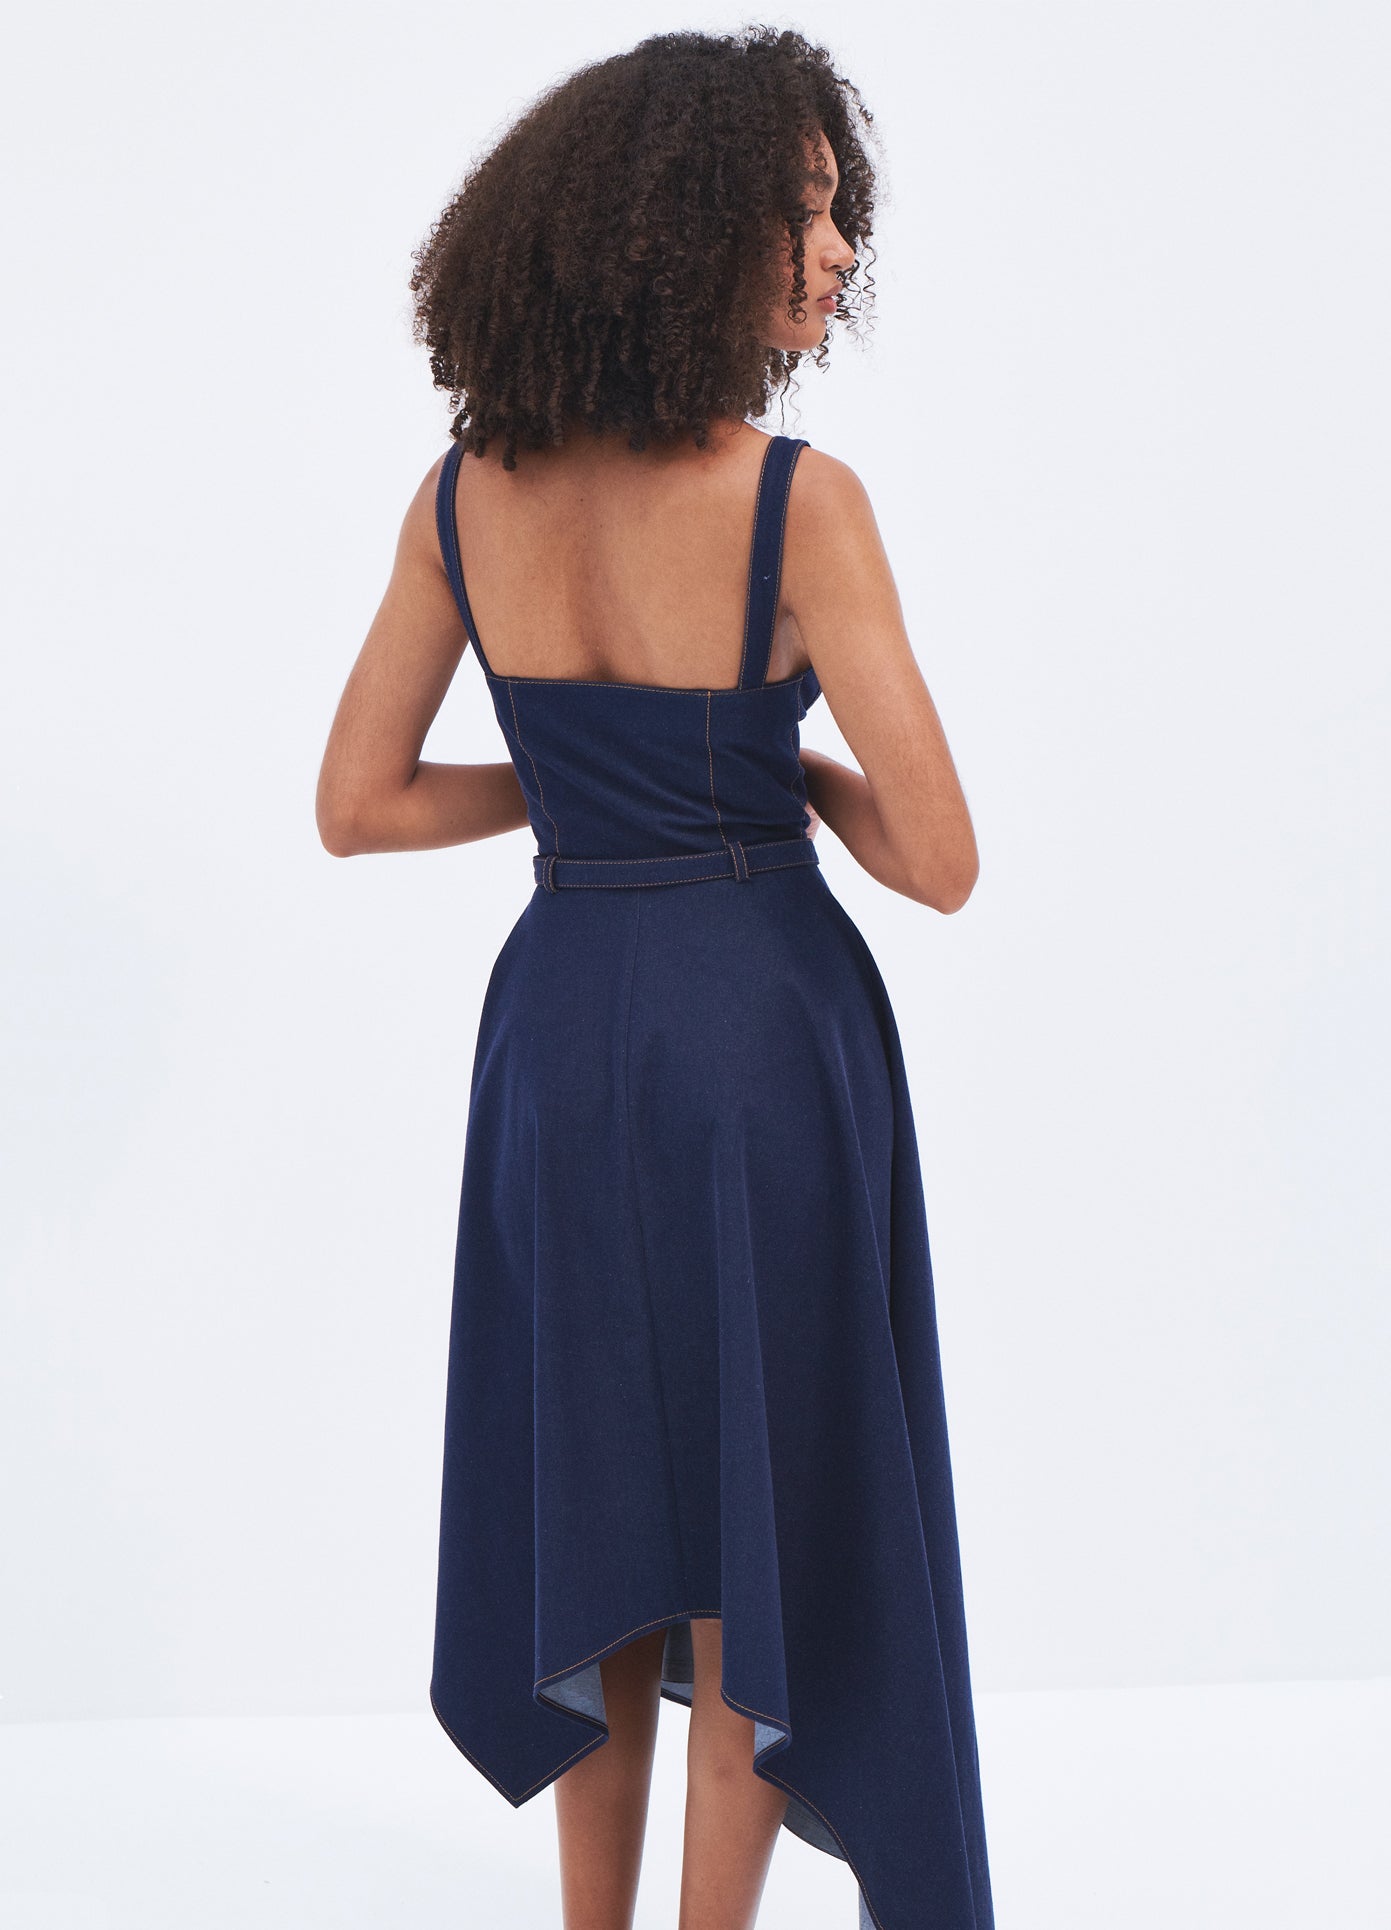 MONSE Stretch Denim Dress in Indigo on model back view